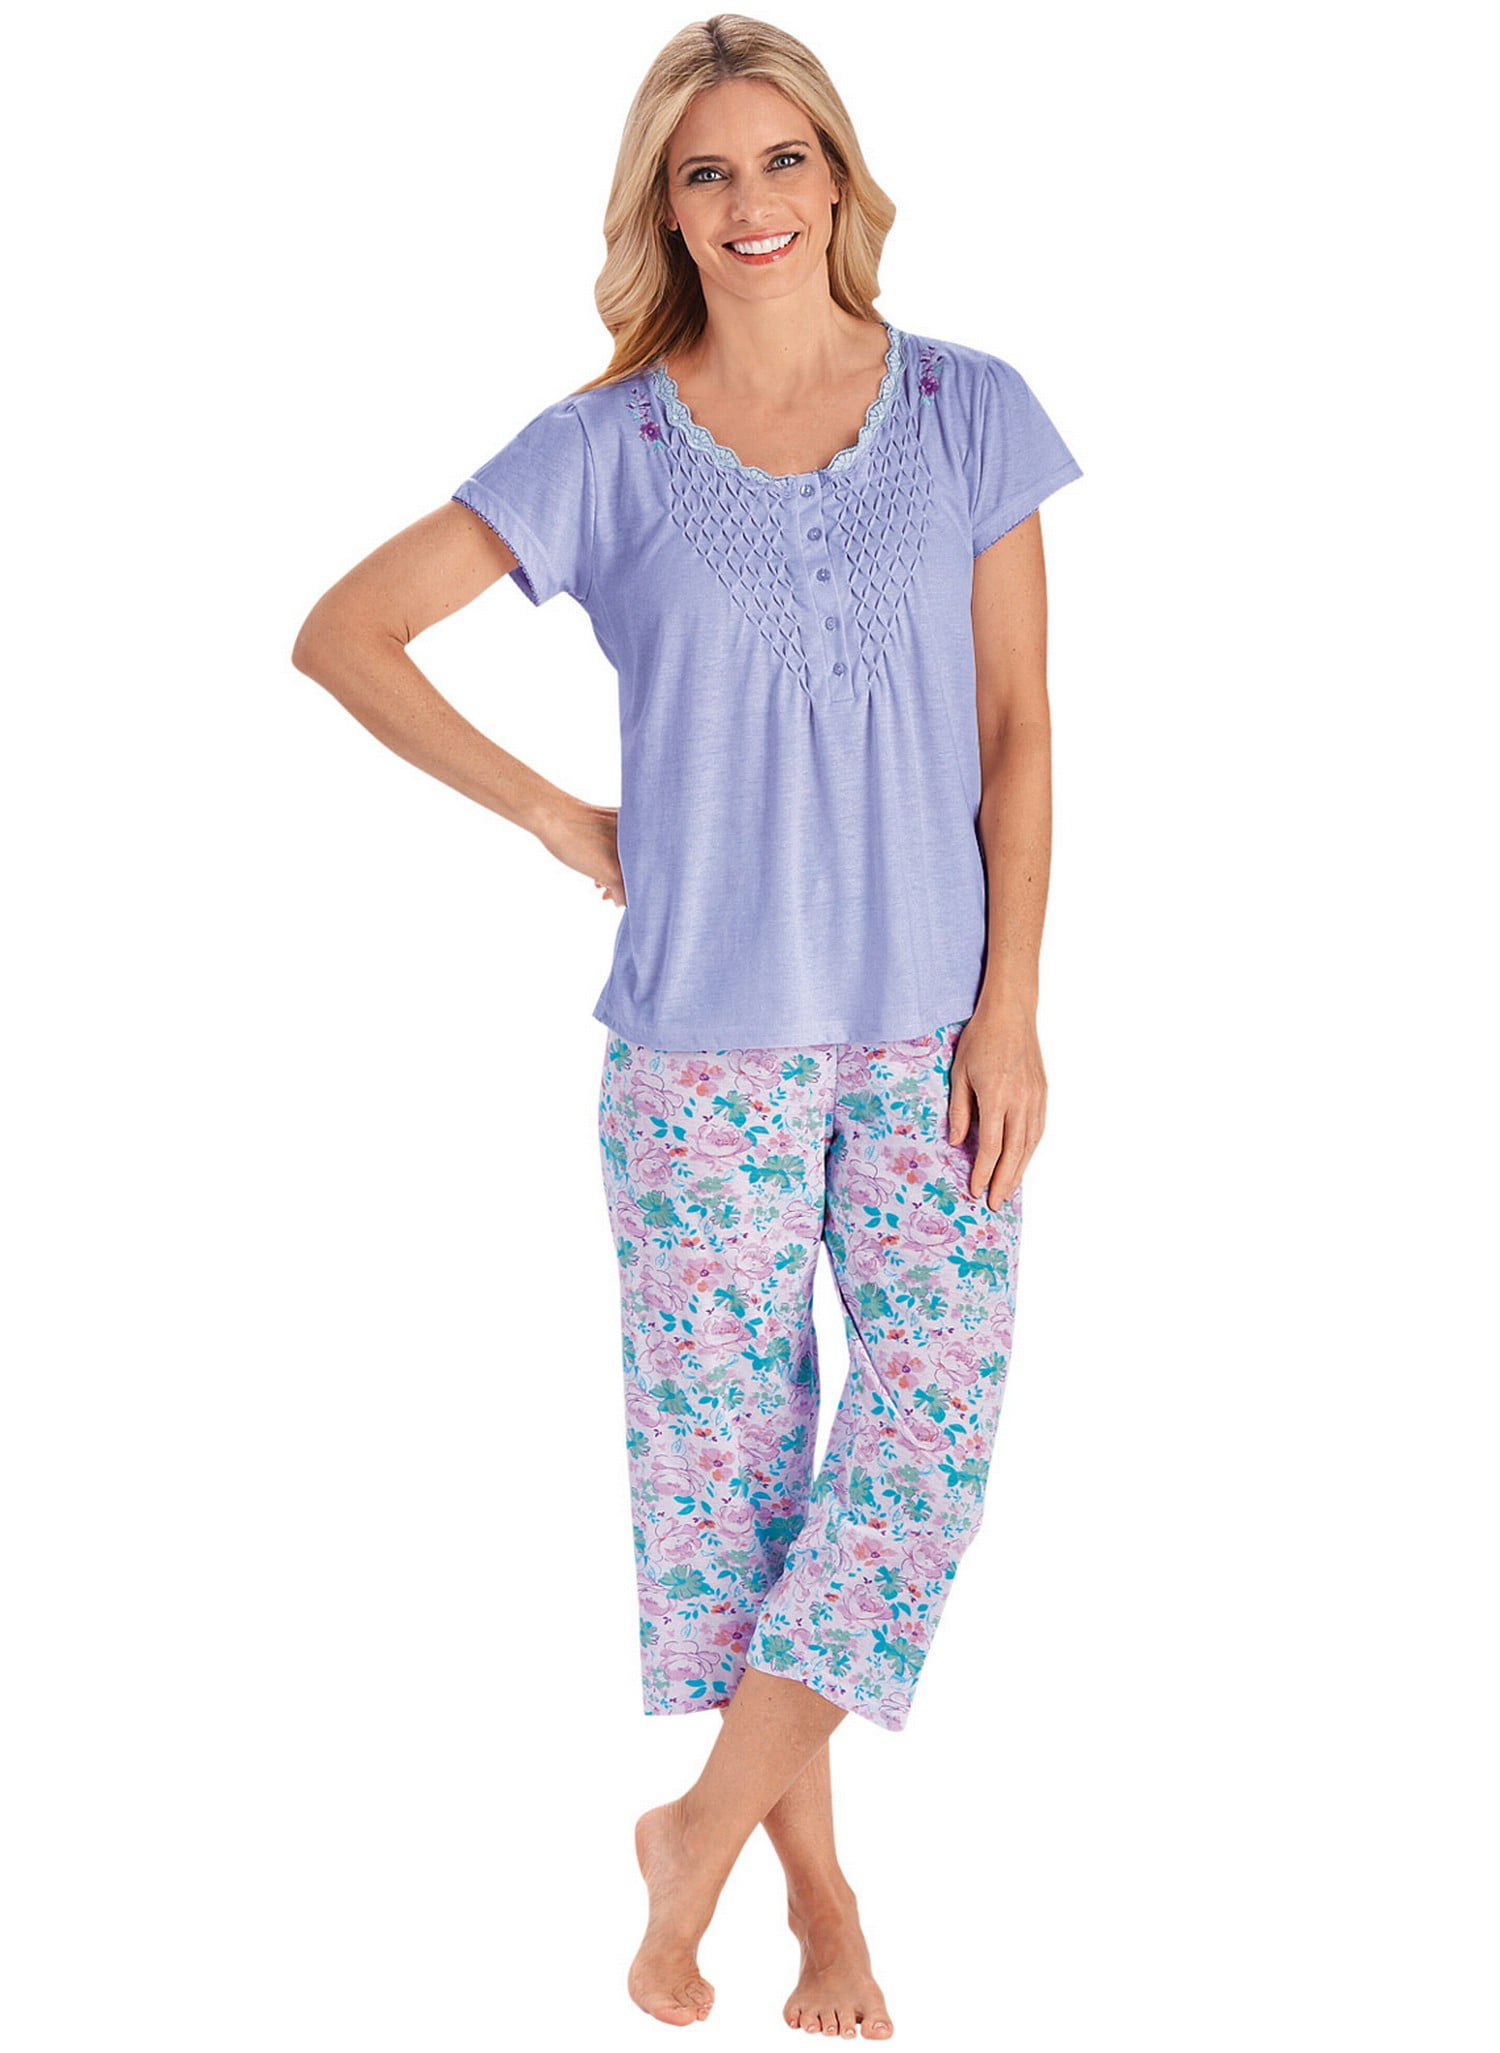 Pajama Set for Women with Capris - Short Sleeve Sleepwear Pjs